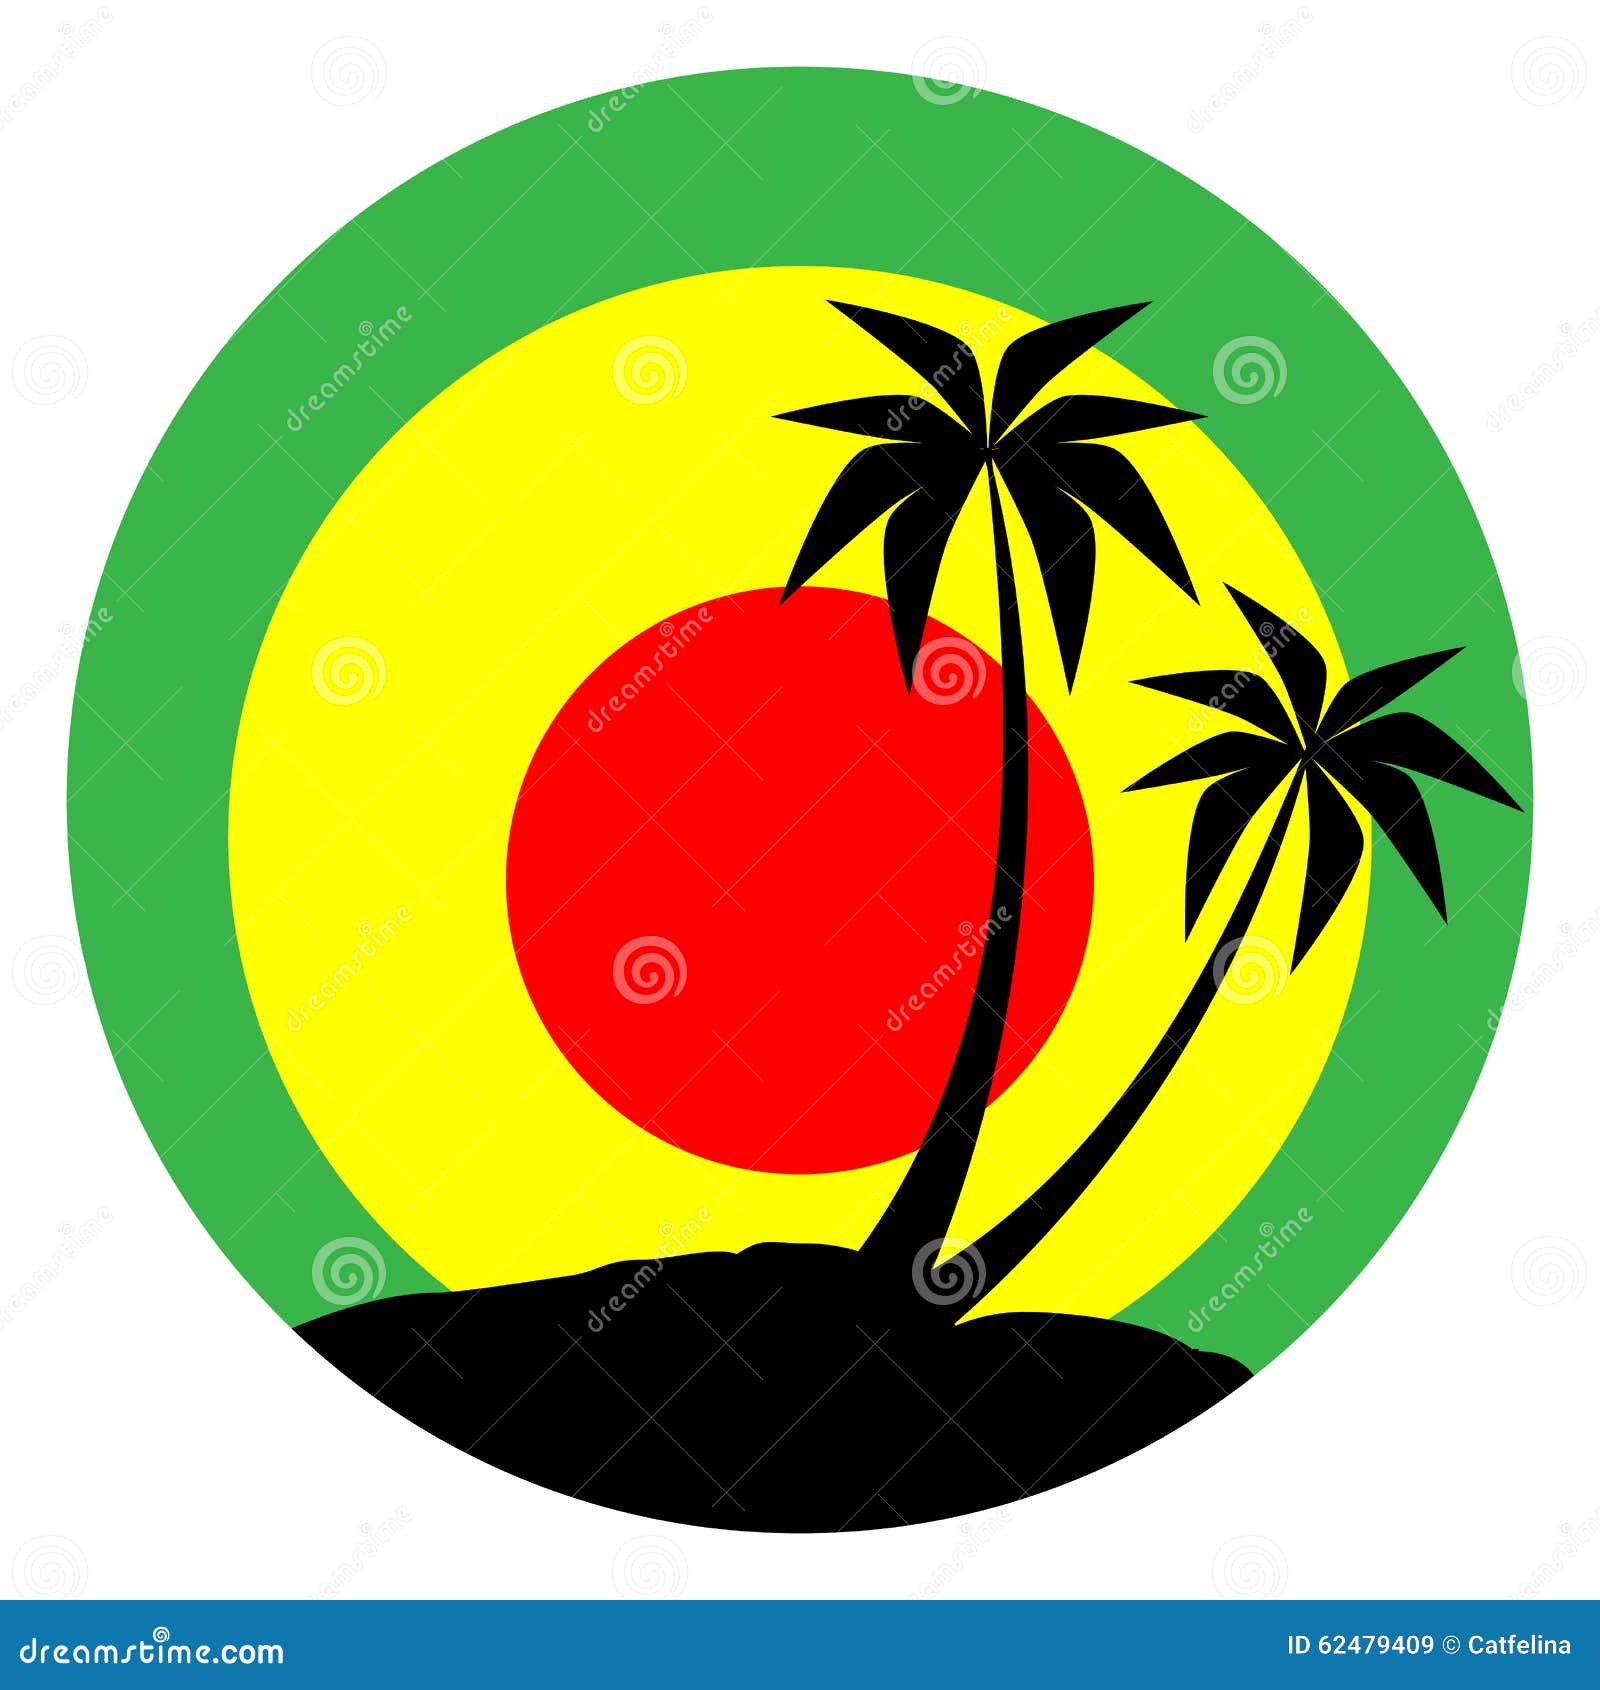 reggae emblem with black pulms silhouette